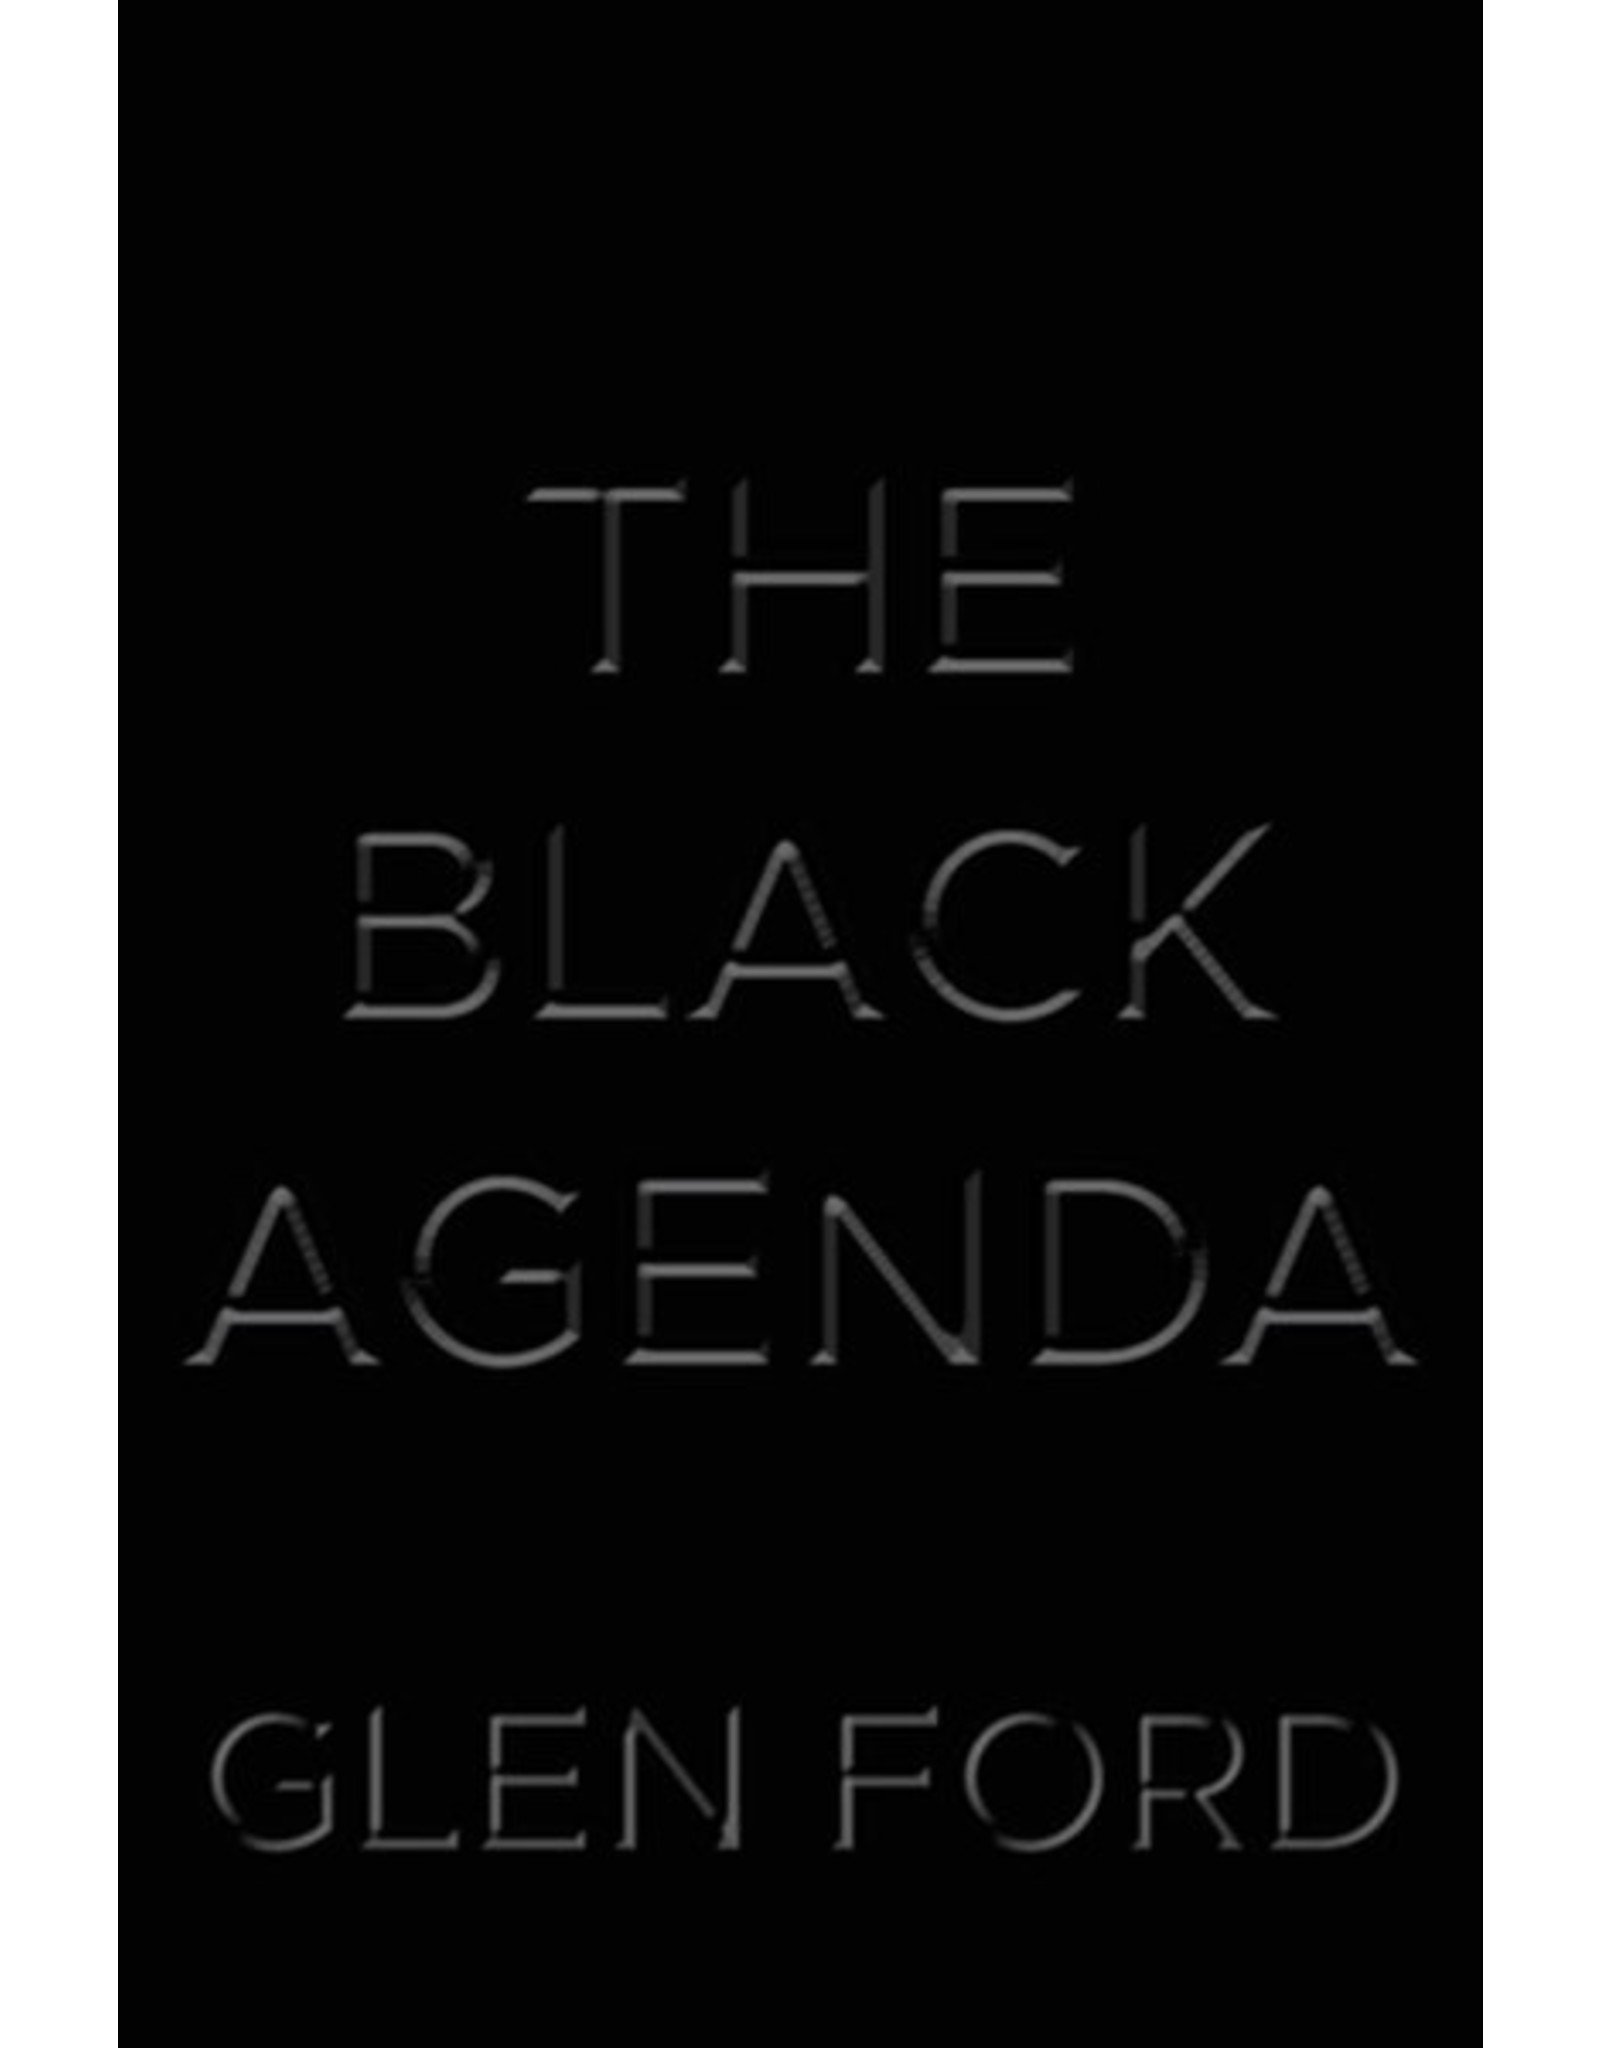 Books The Black Agenda by Glen Ford (Virtual event 5.12)